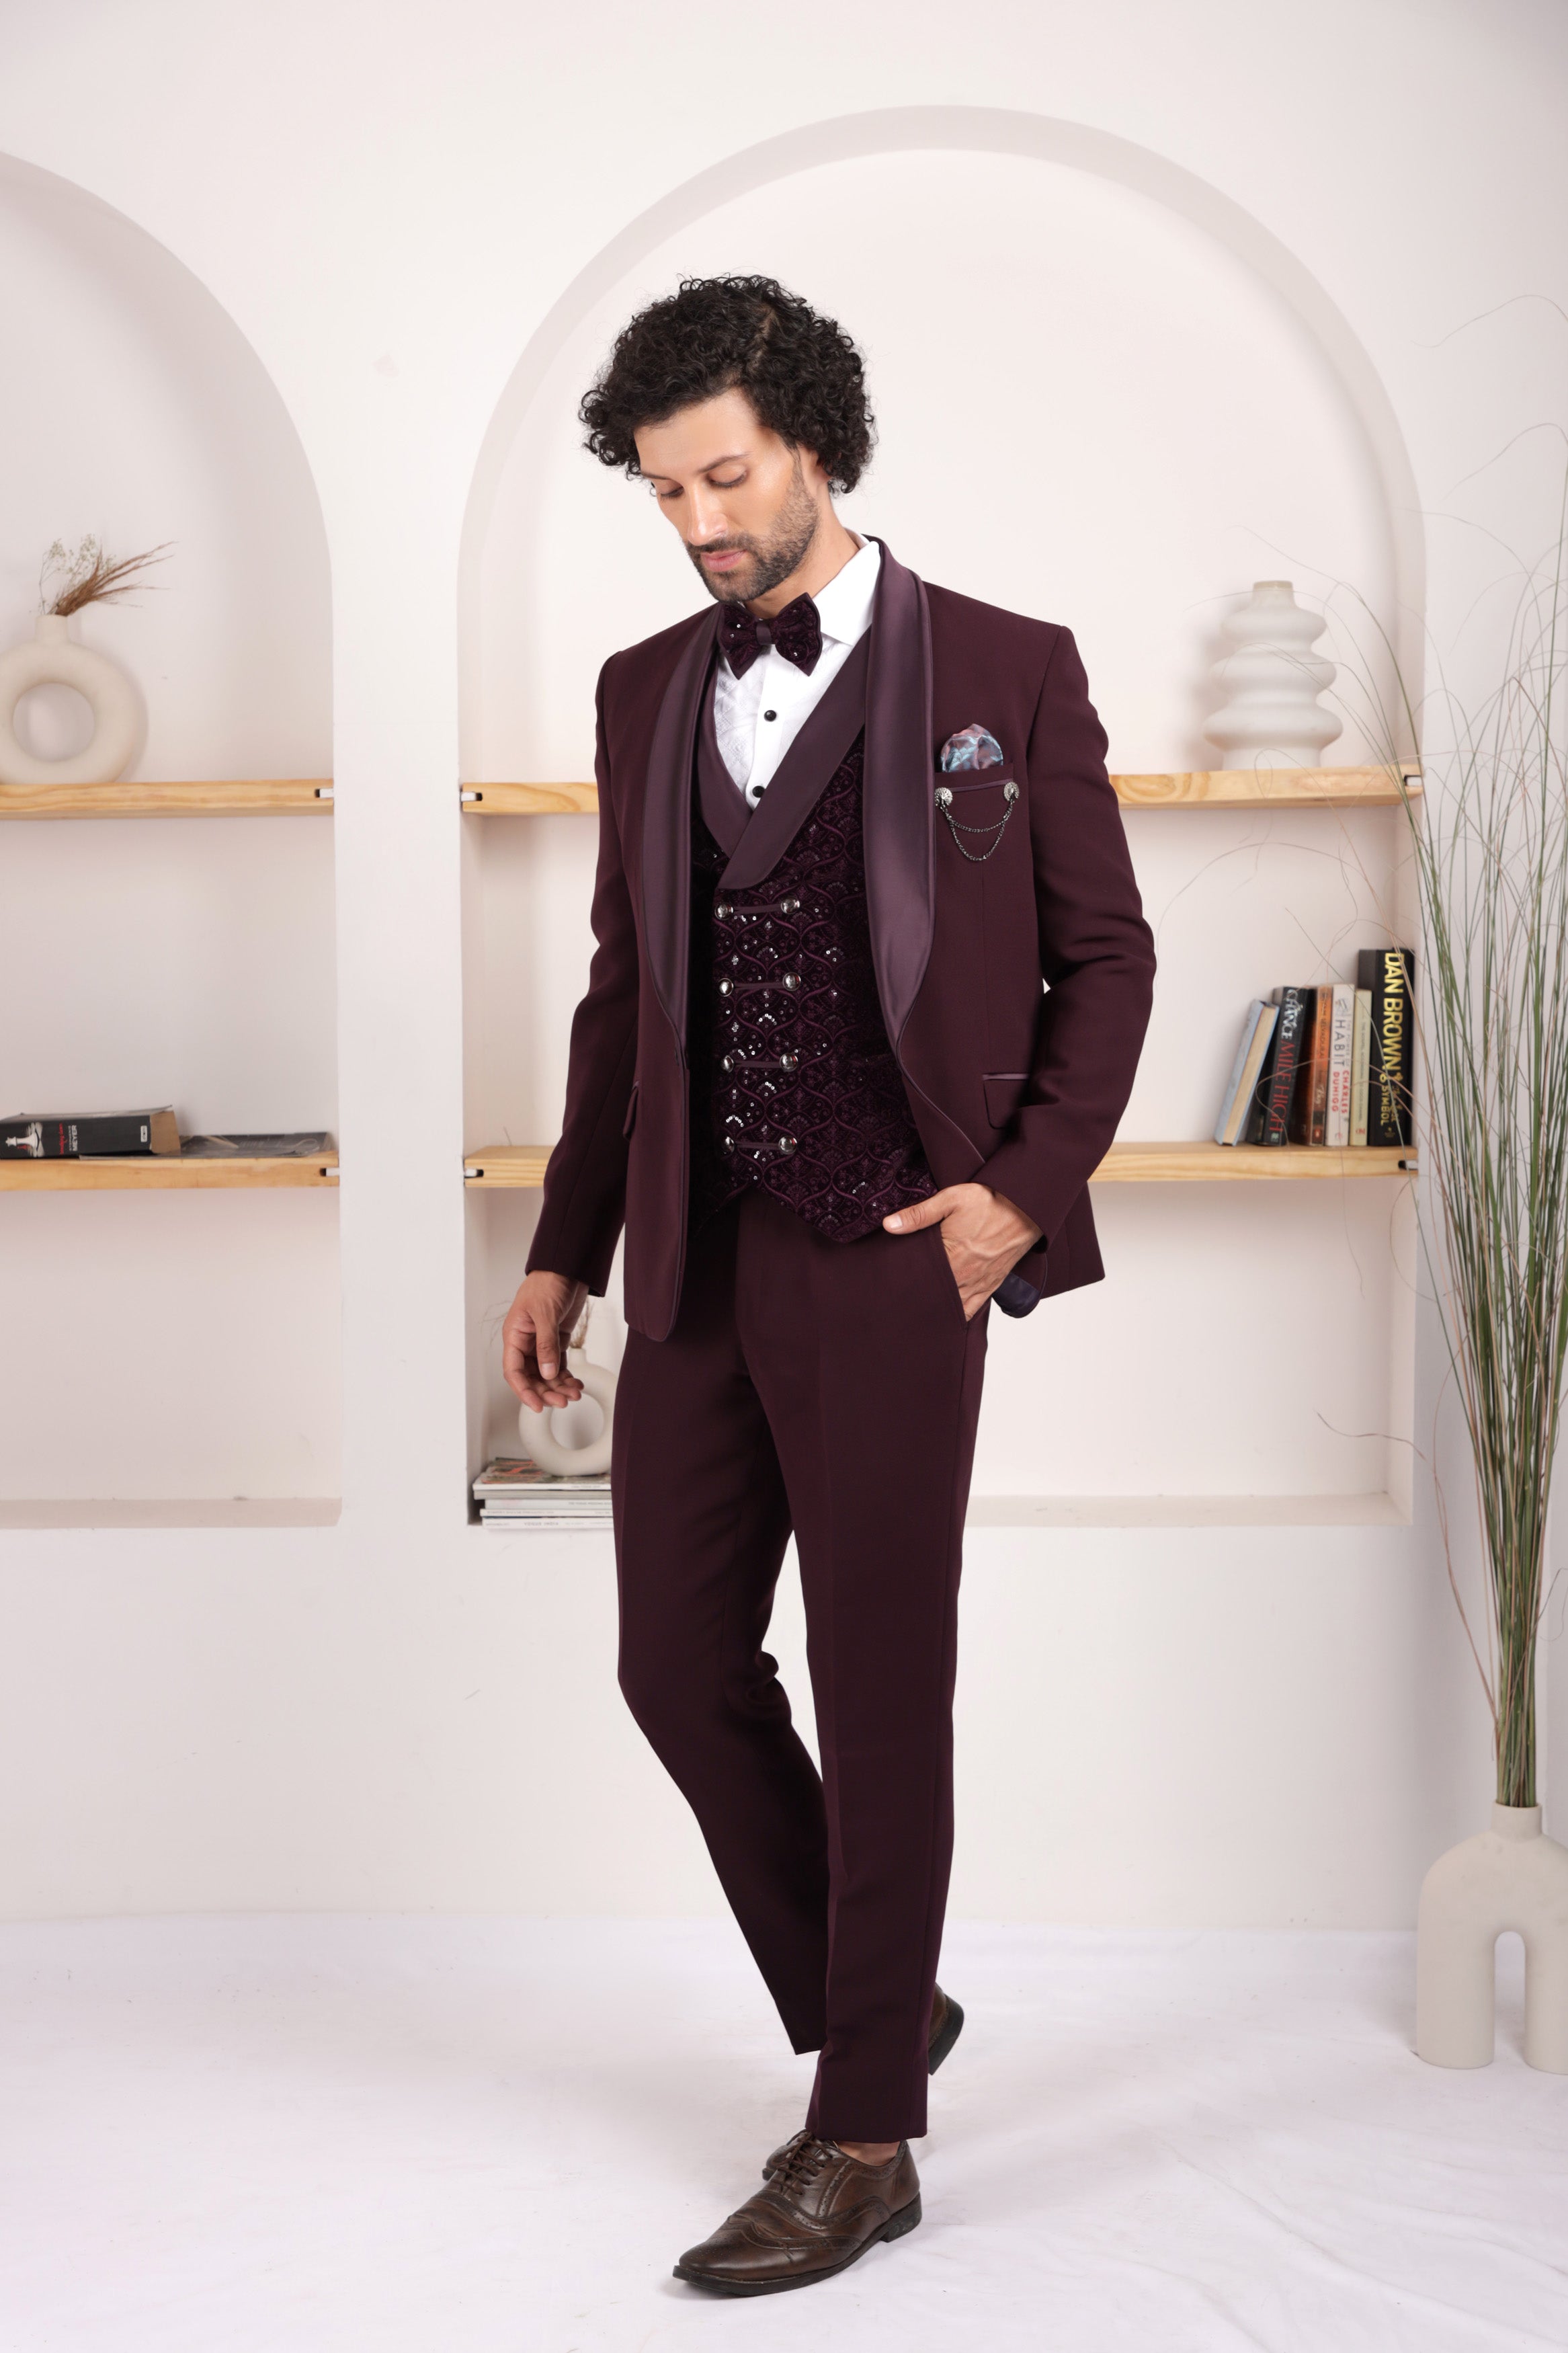 Black Men Suit 3 Piece Slim Fit Peak Lapel Party Prom Groom Tuxedo Wedding  Suits | eBay